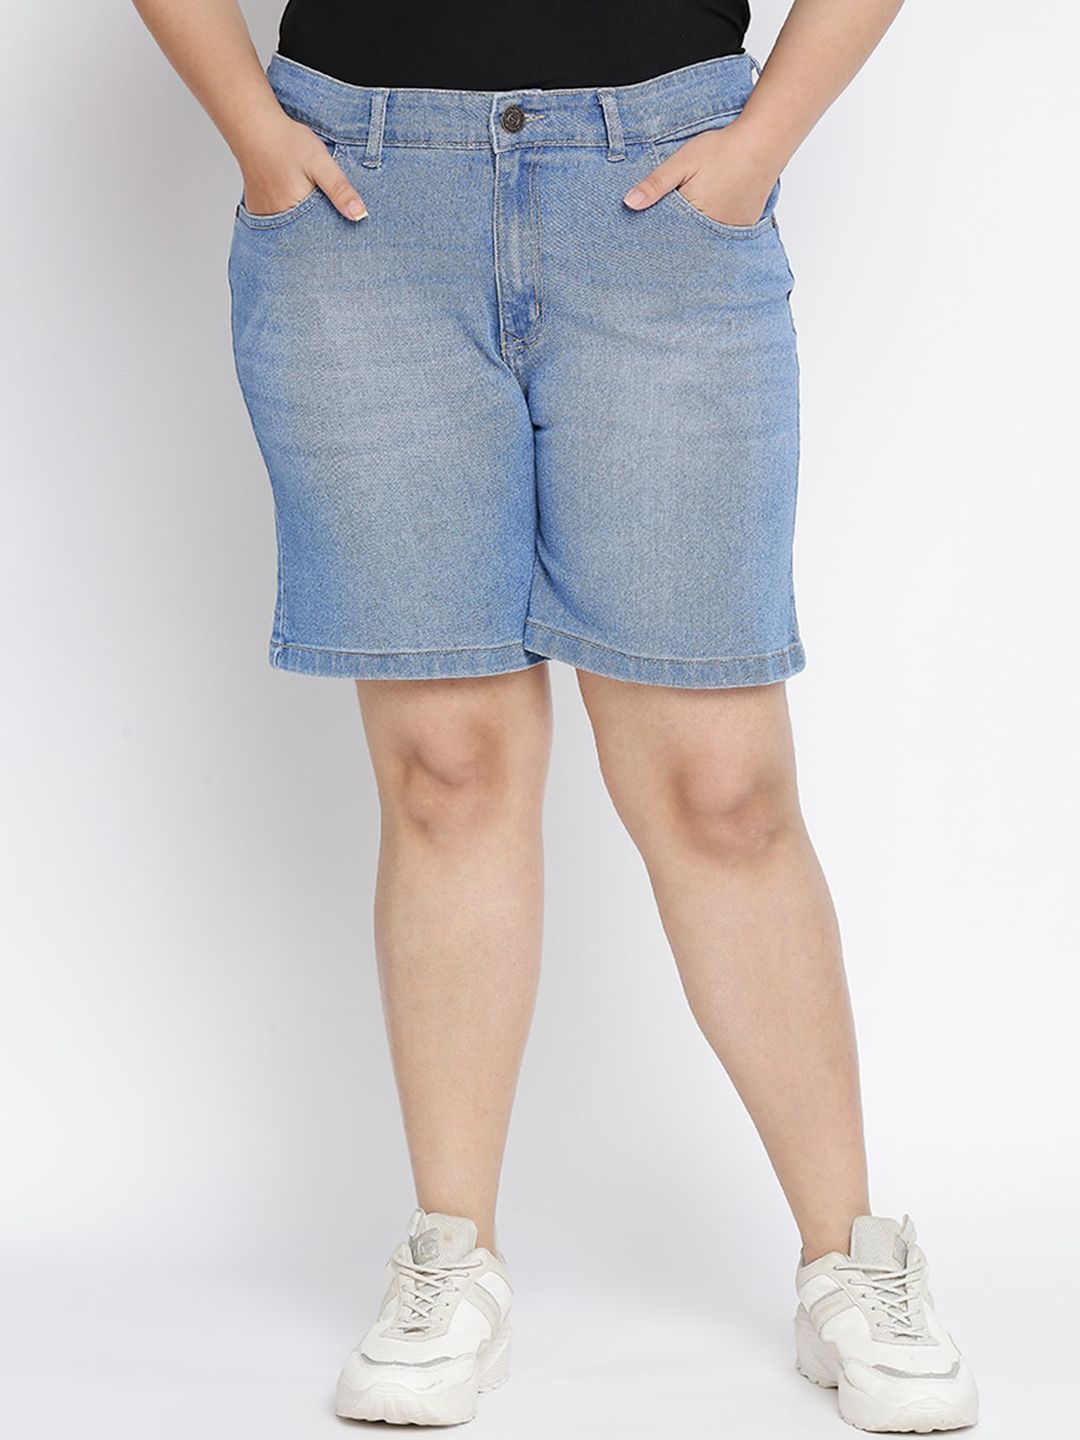 ZUSH Women Plus Size Blue Washed Denim Shorts Price in India